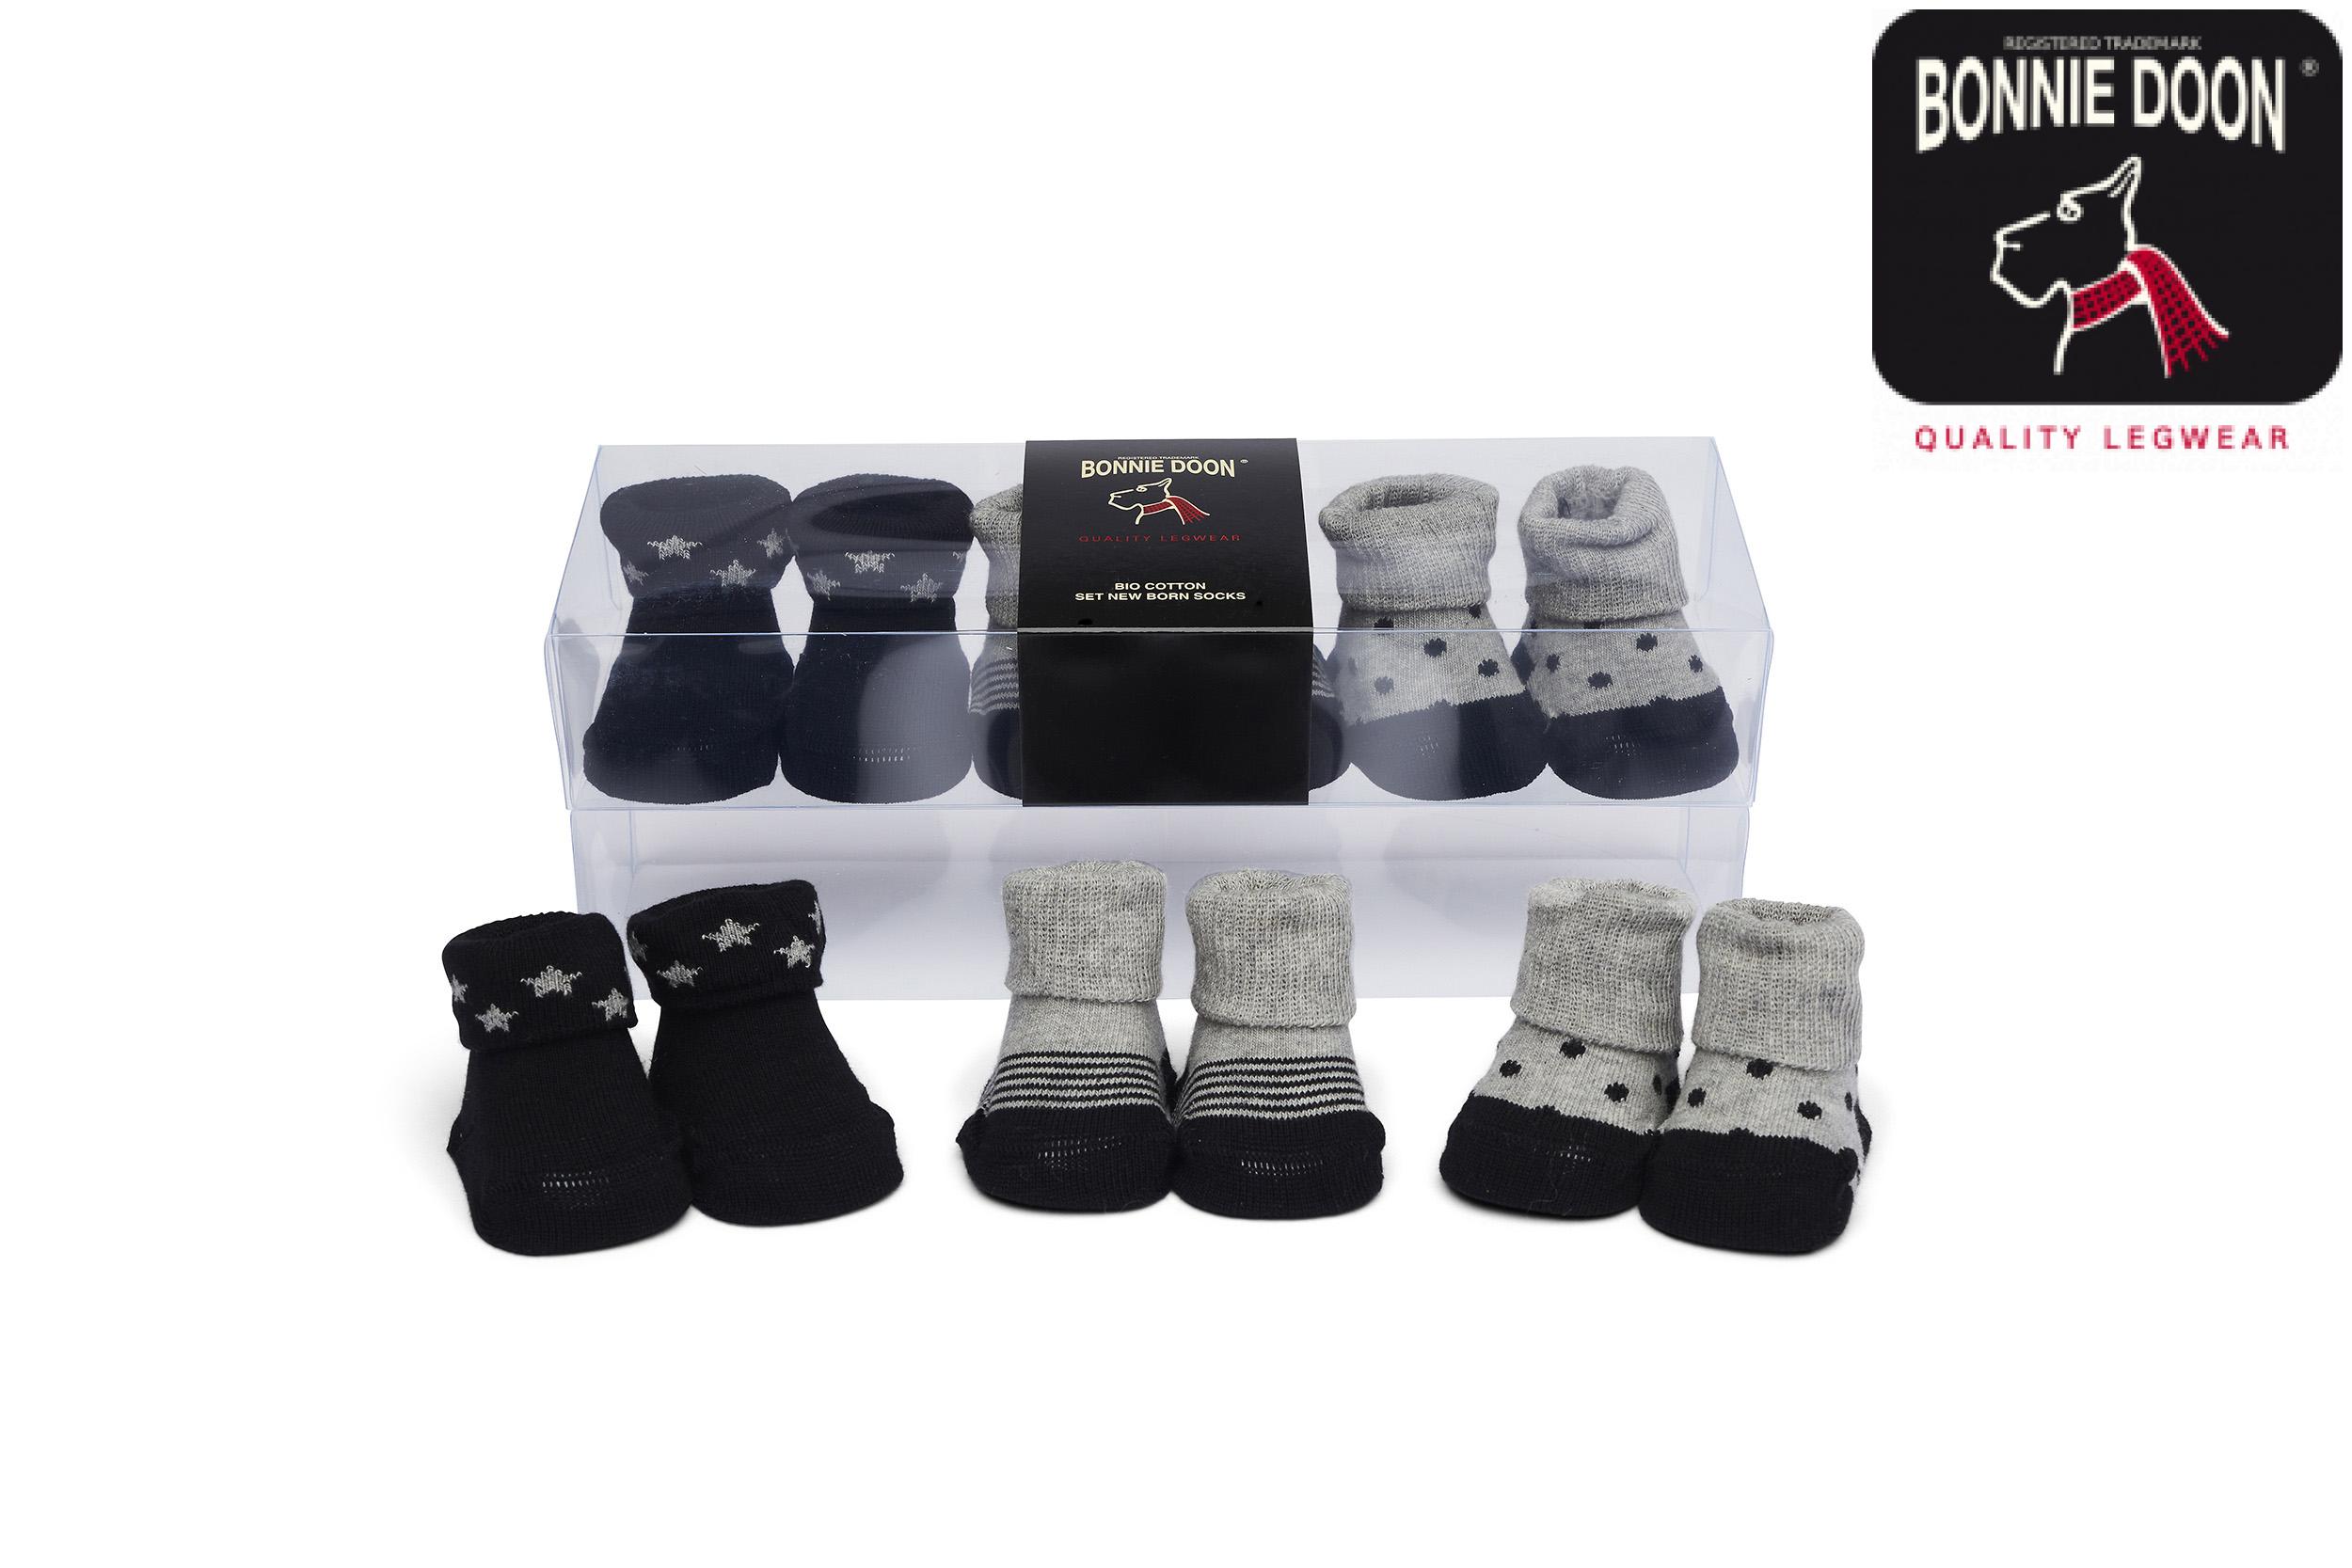 Newborn socks in Gift Box Black